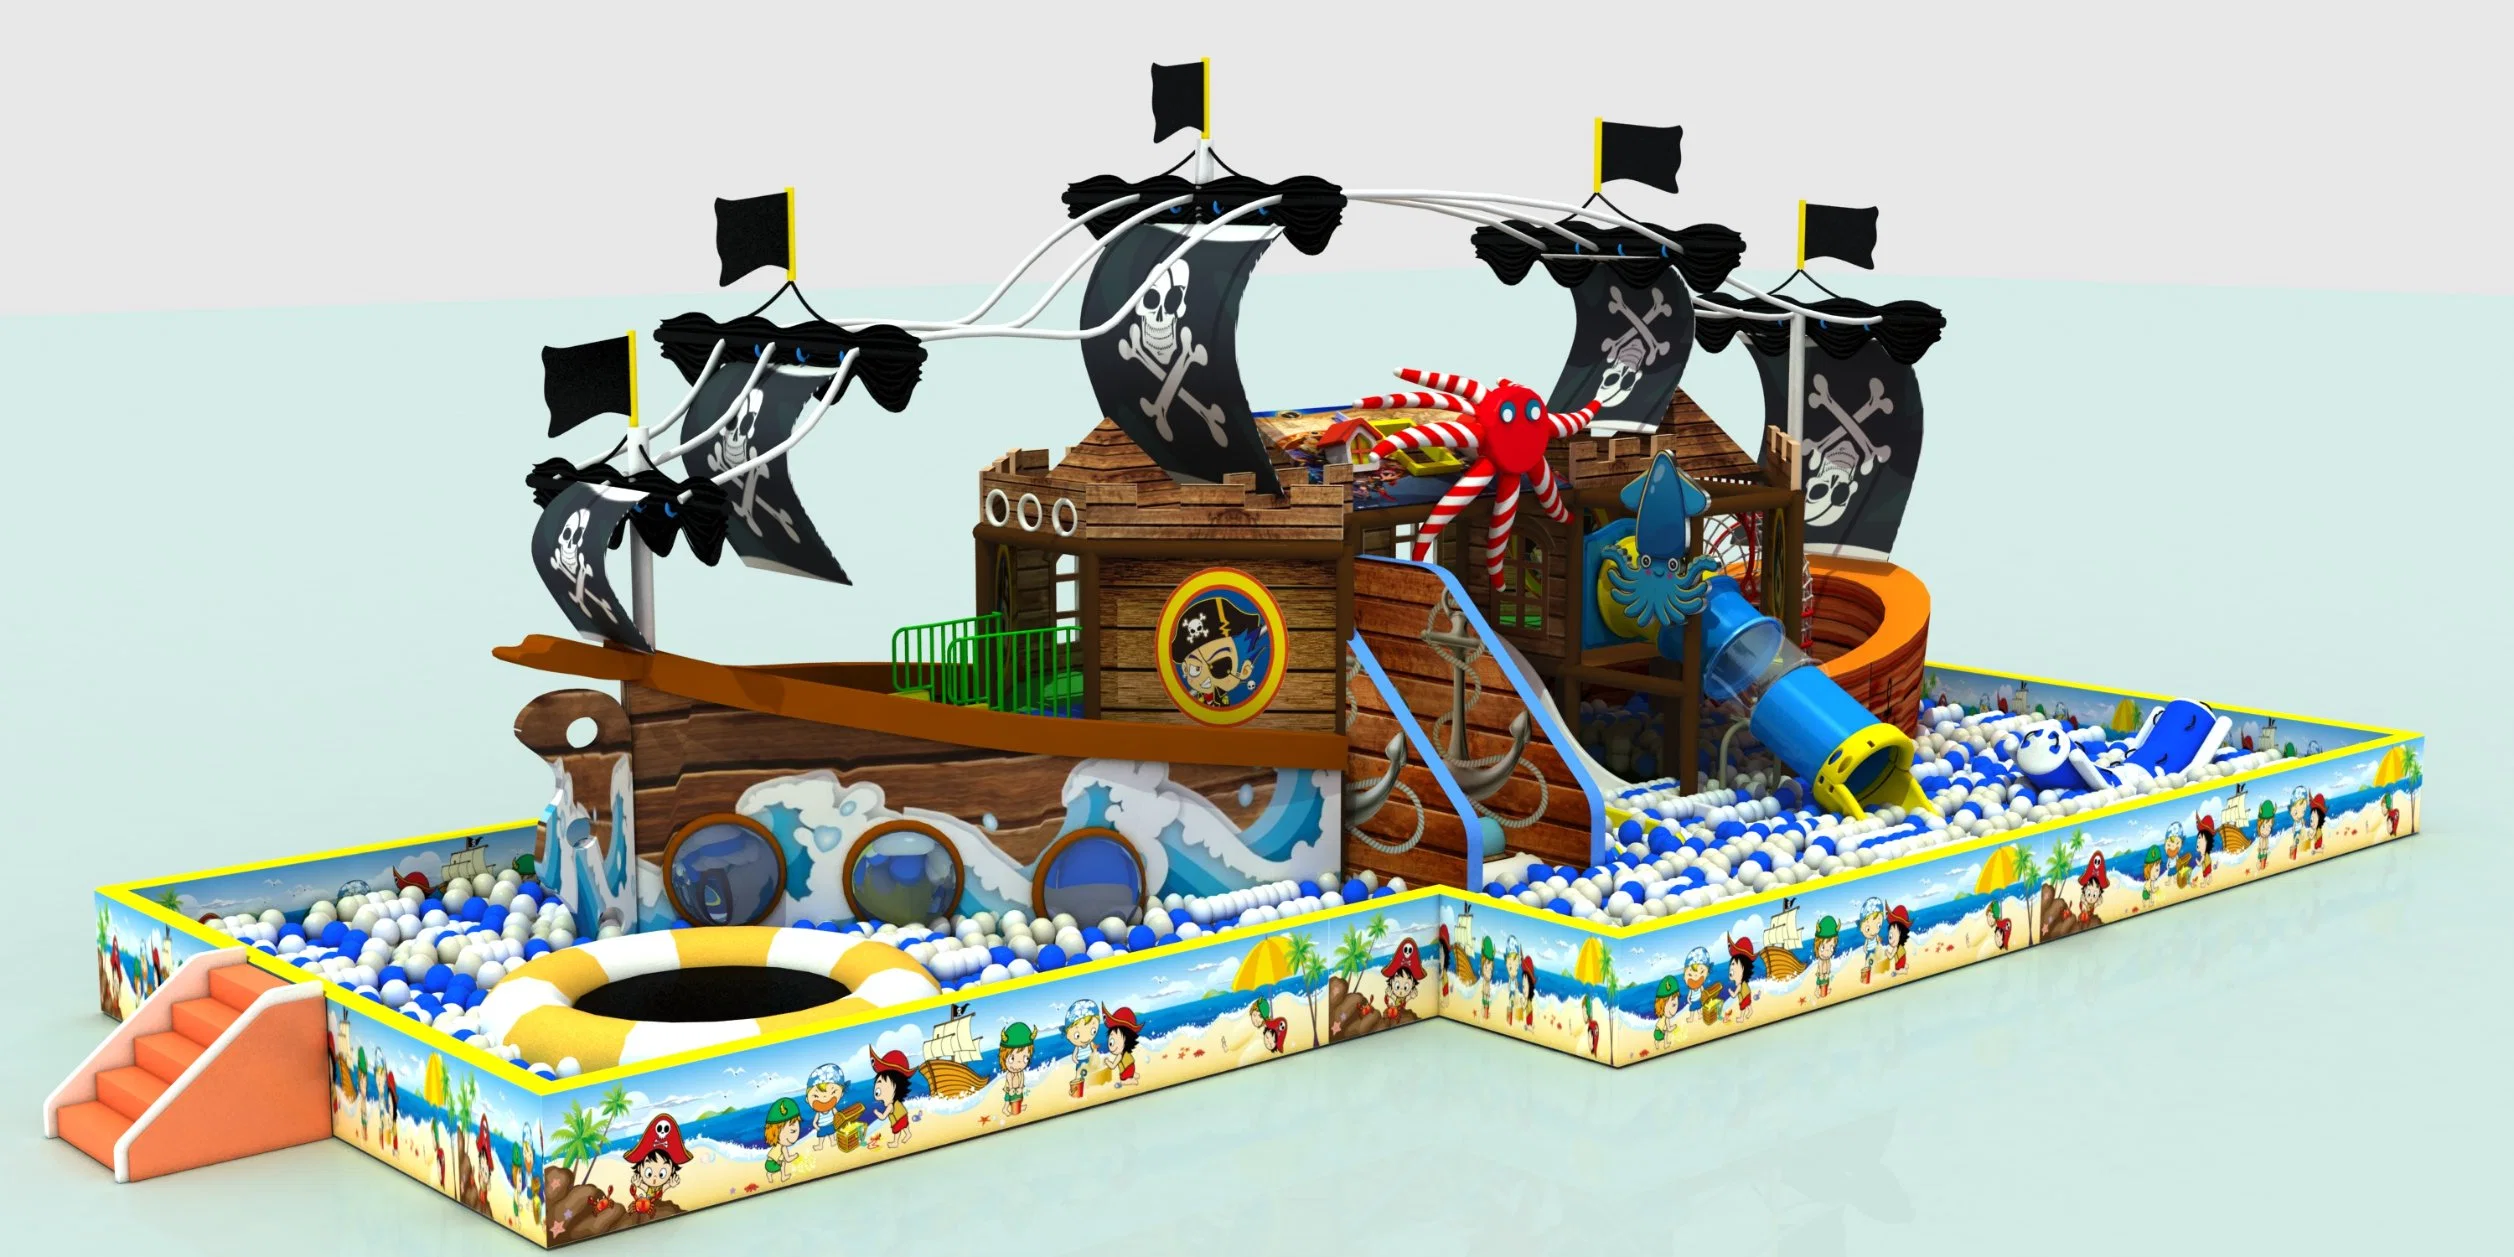 Centro comercial personalizada Atrium Barco Pirata juegos de jardín armazón de acero combinación Playground Equipo Castillo